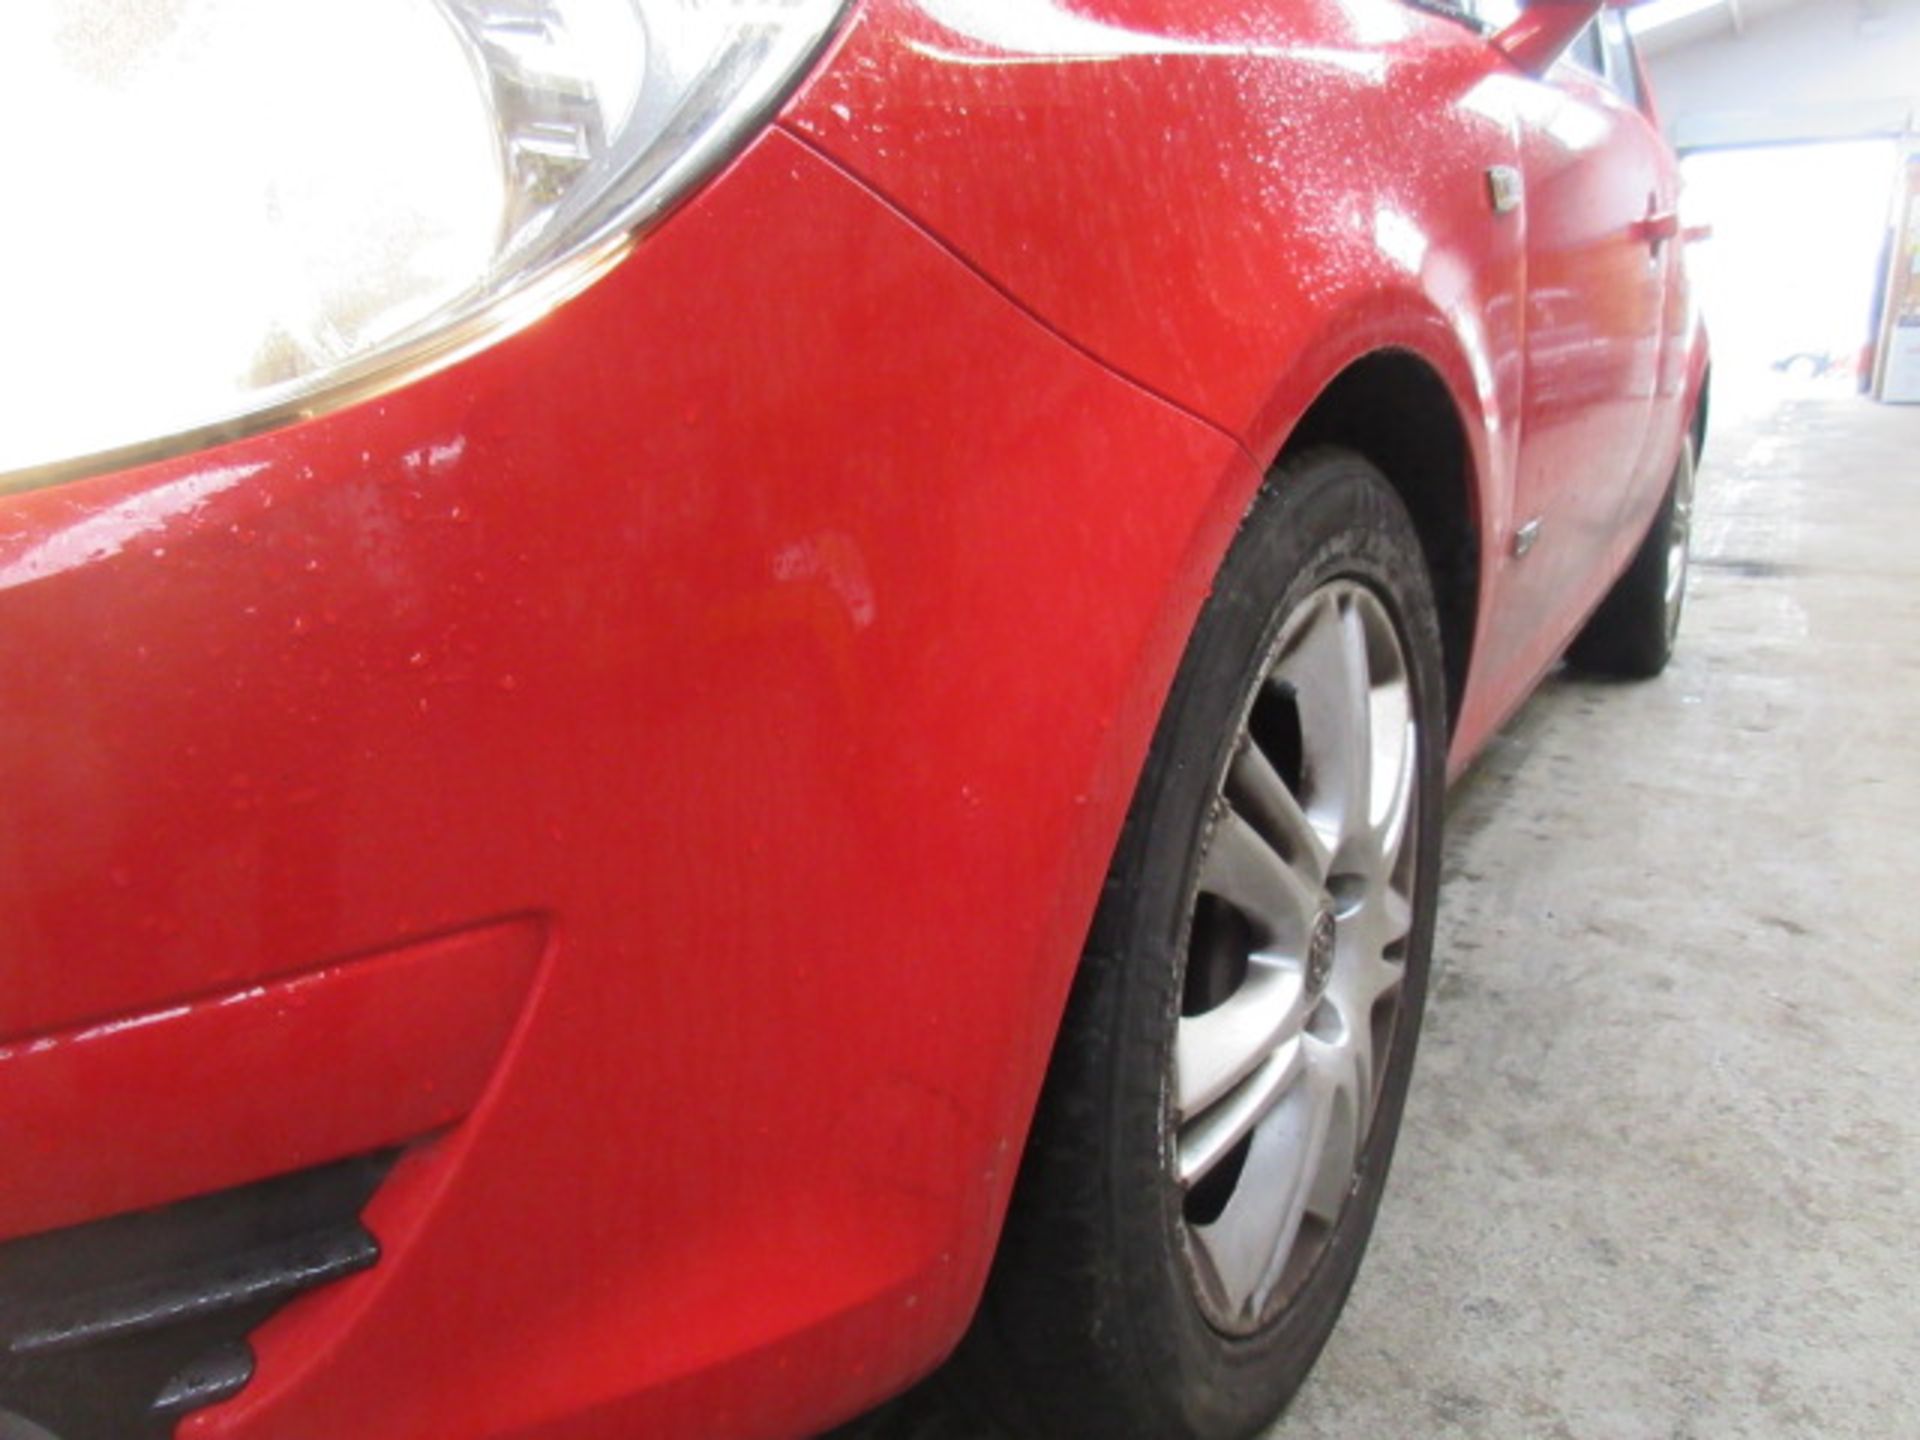 09 09 Vauxhall Corsa Design - Image 2 of 18